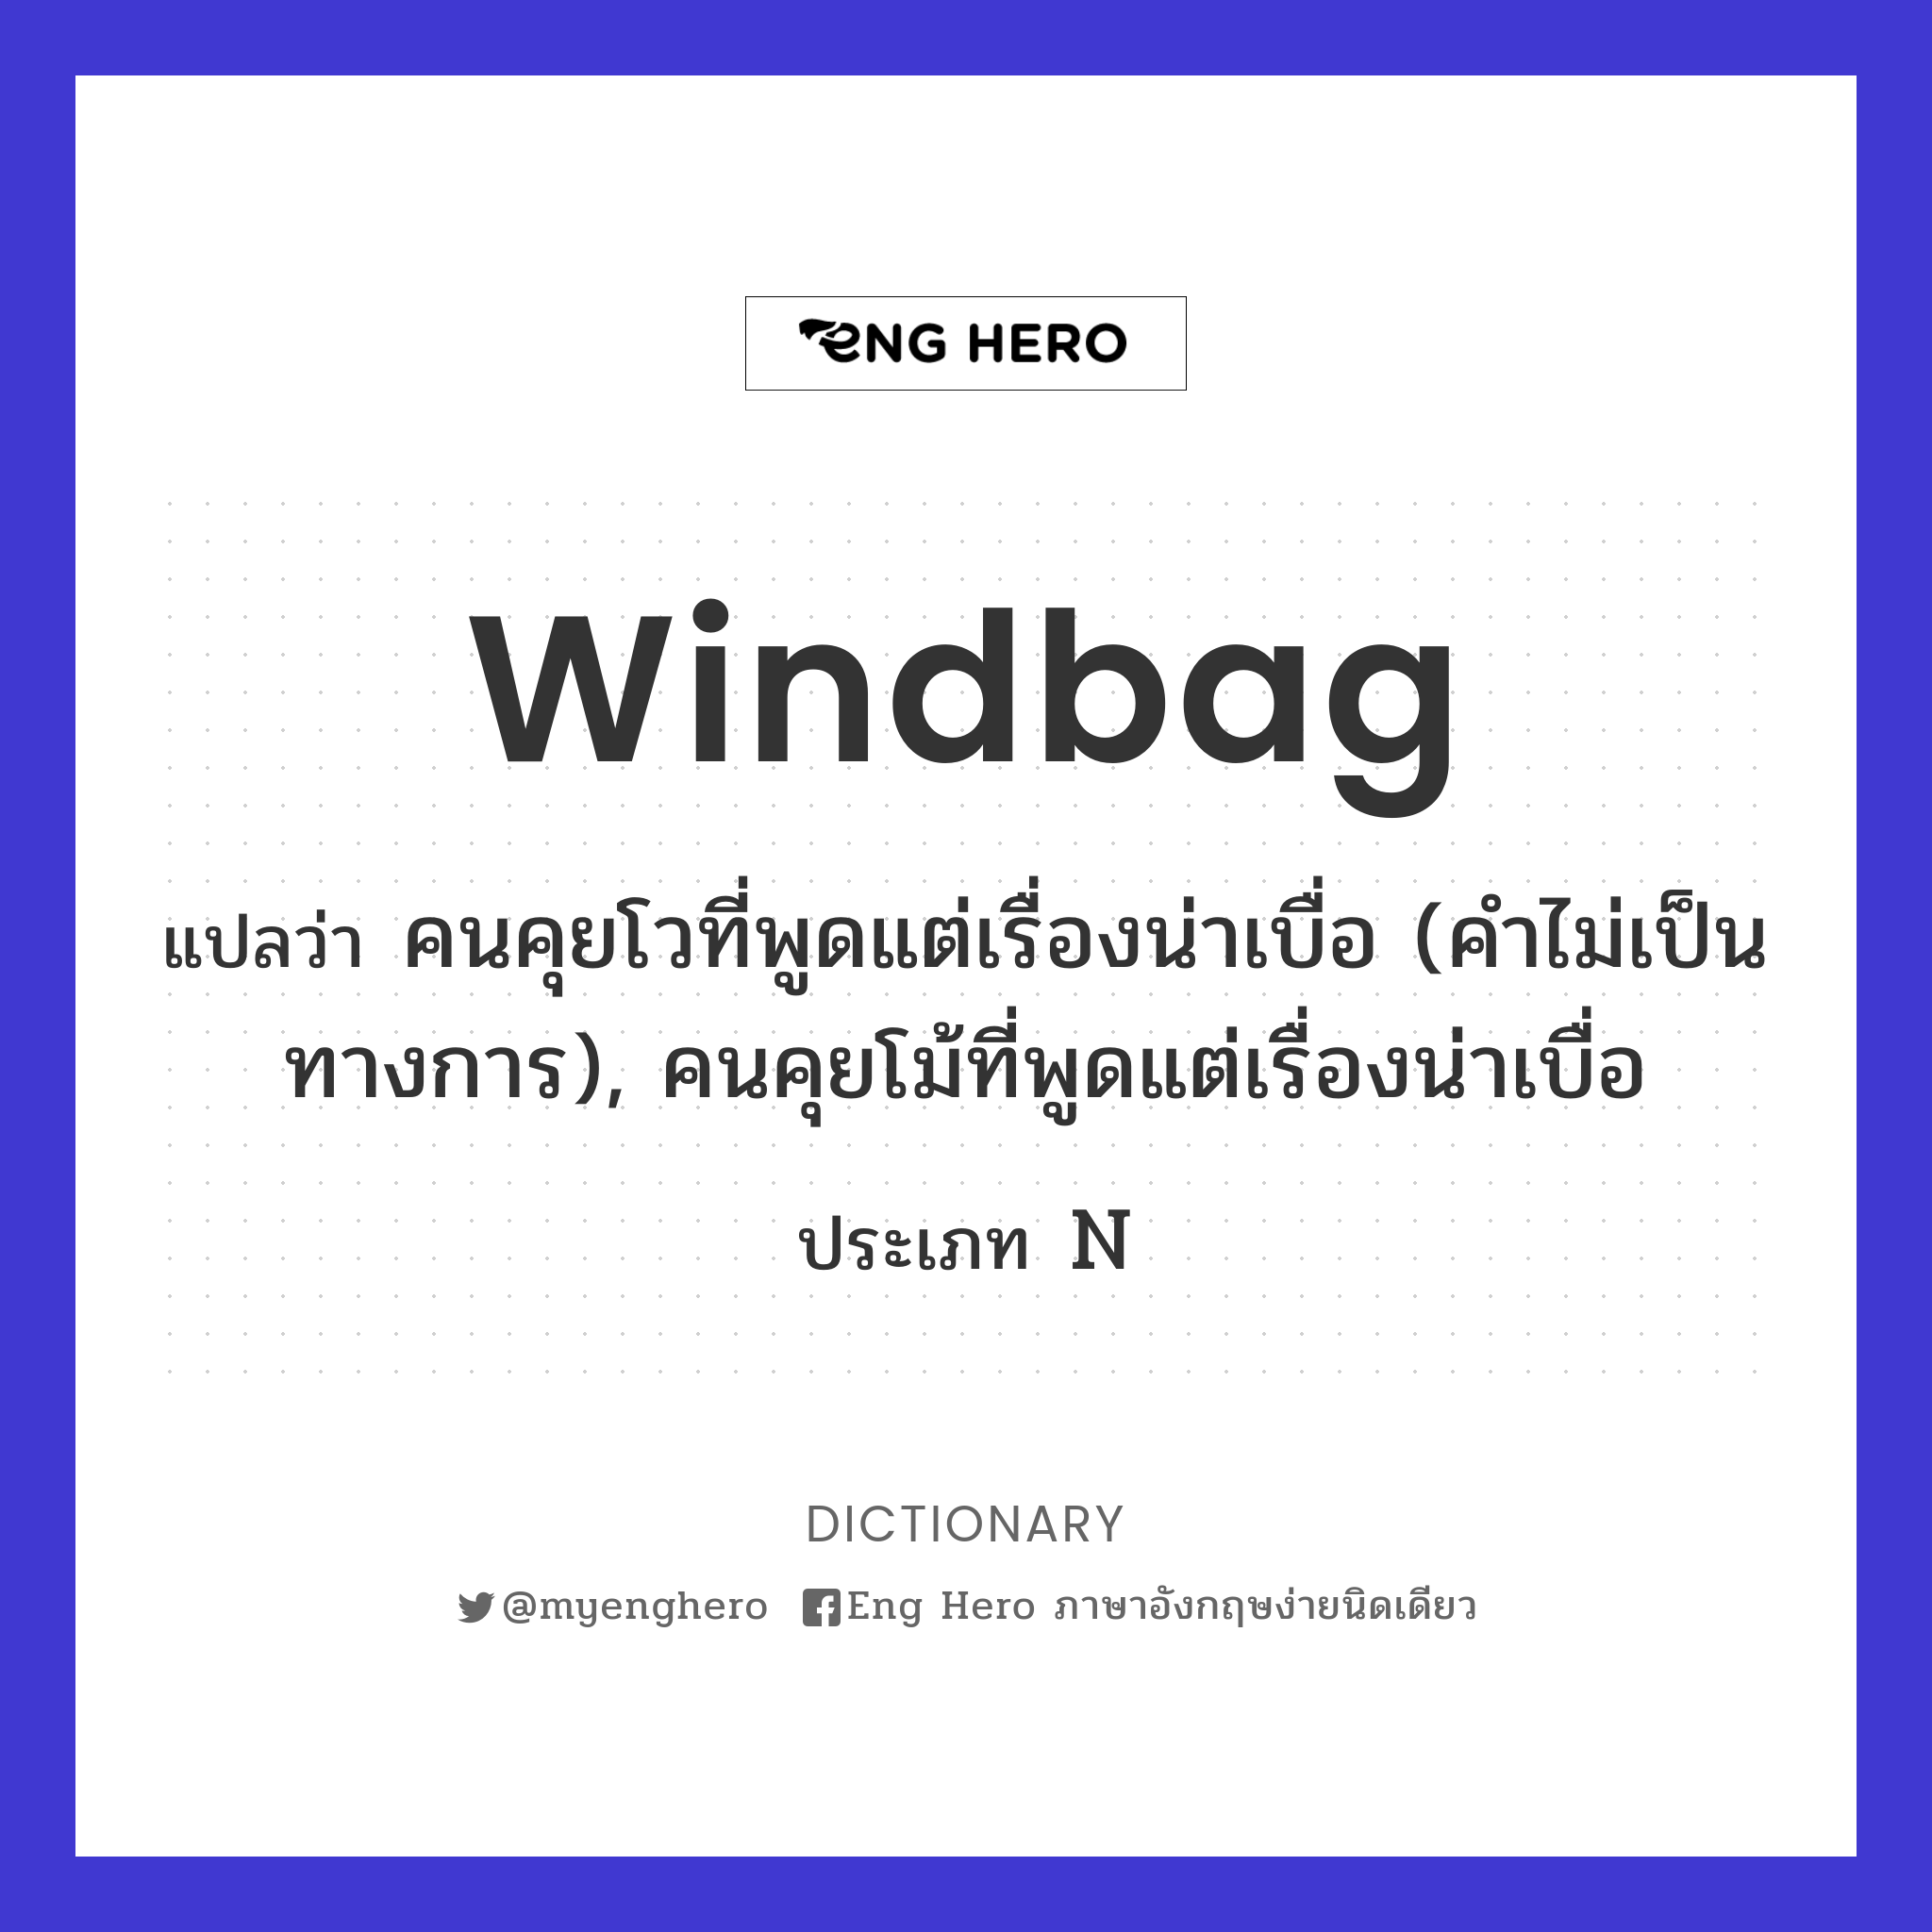 windbag